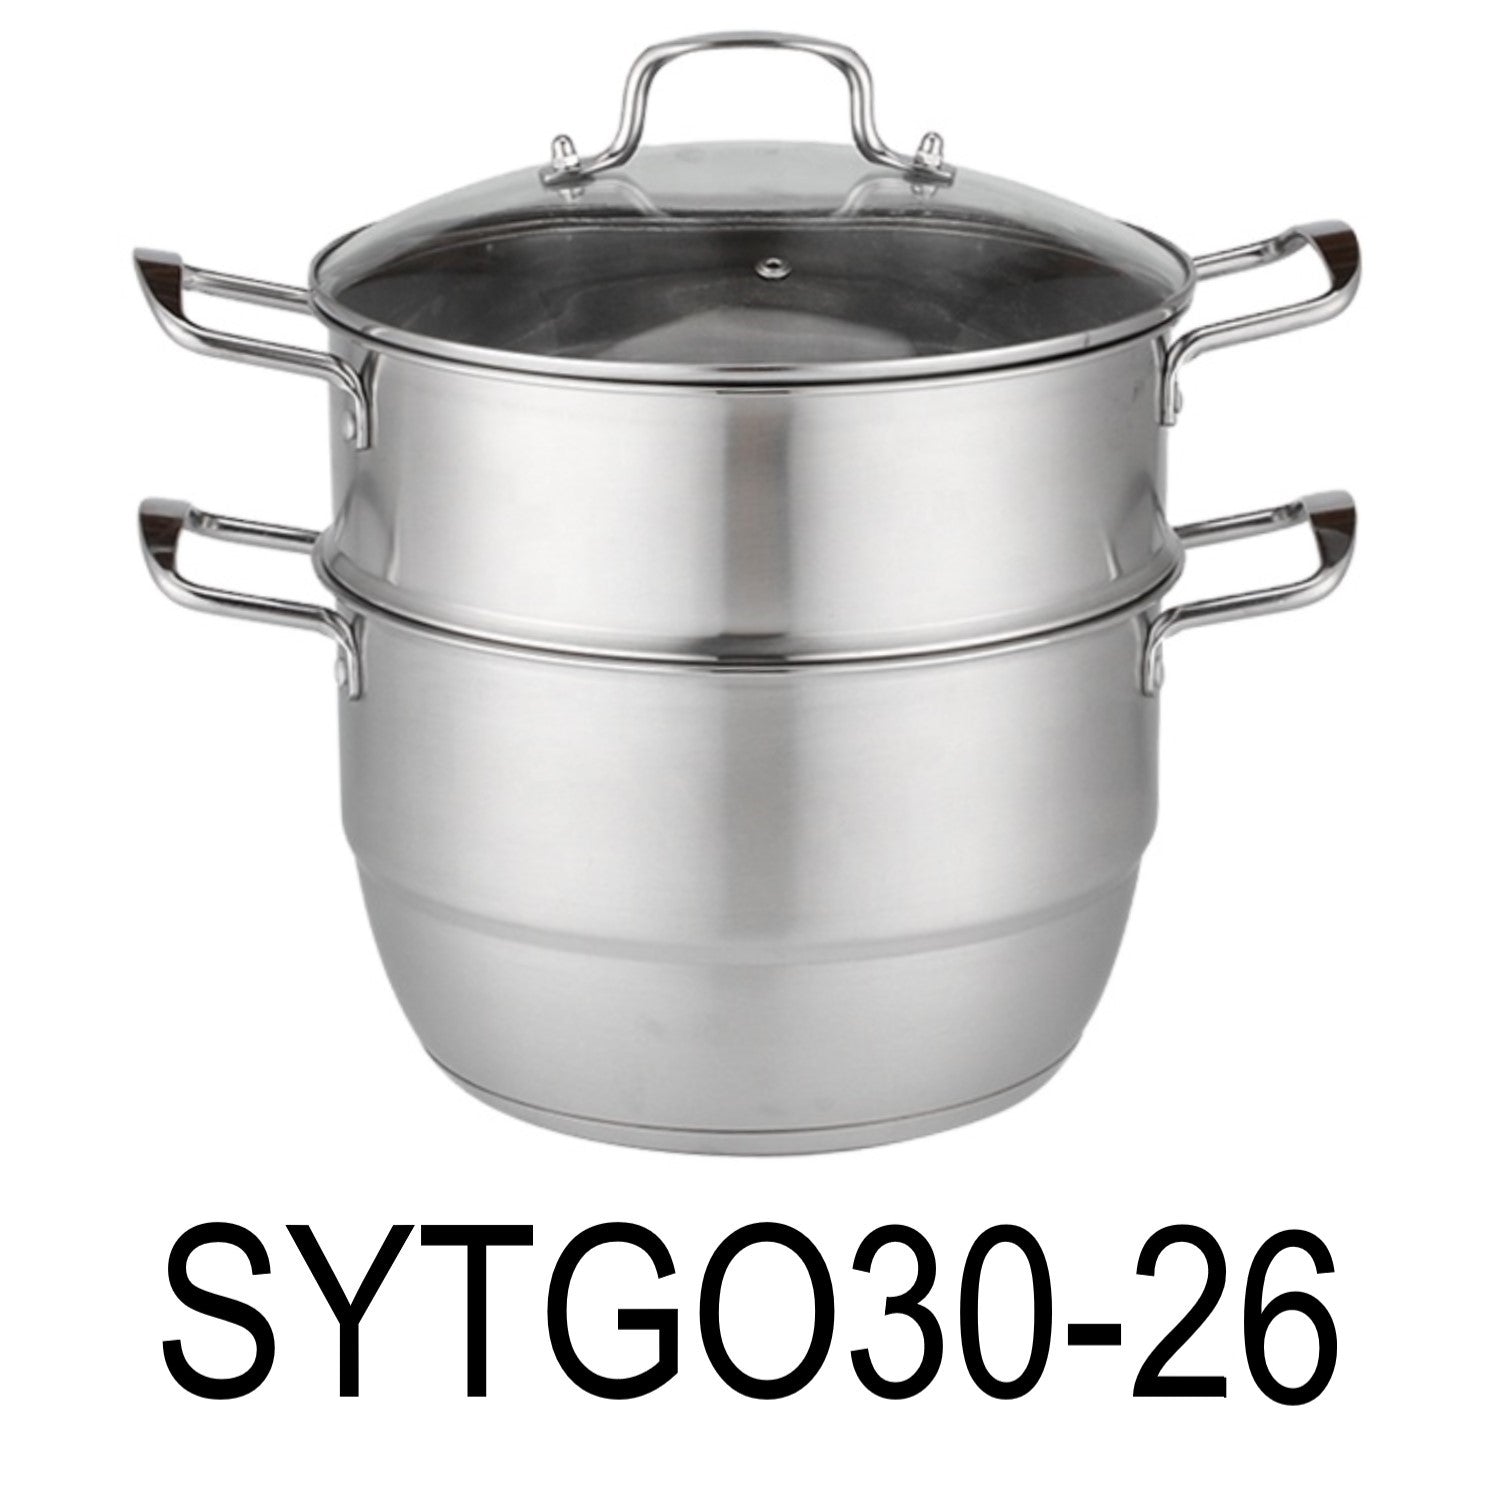 VENTION Induction Steamer Pot for Cooking, Vegetable Steamer